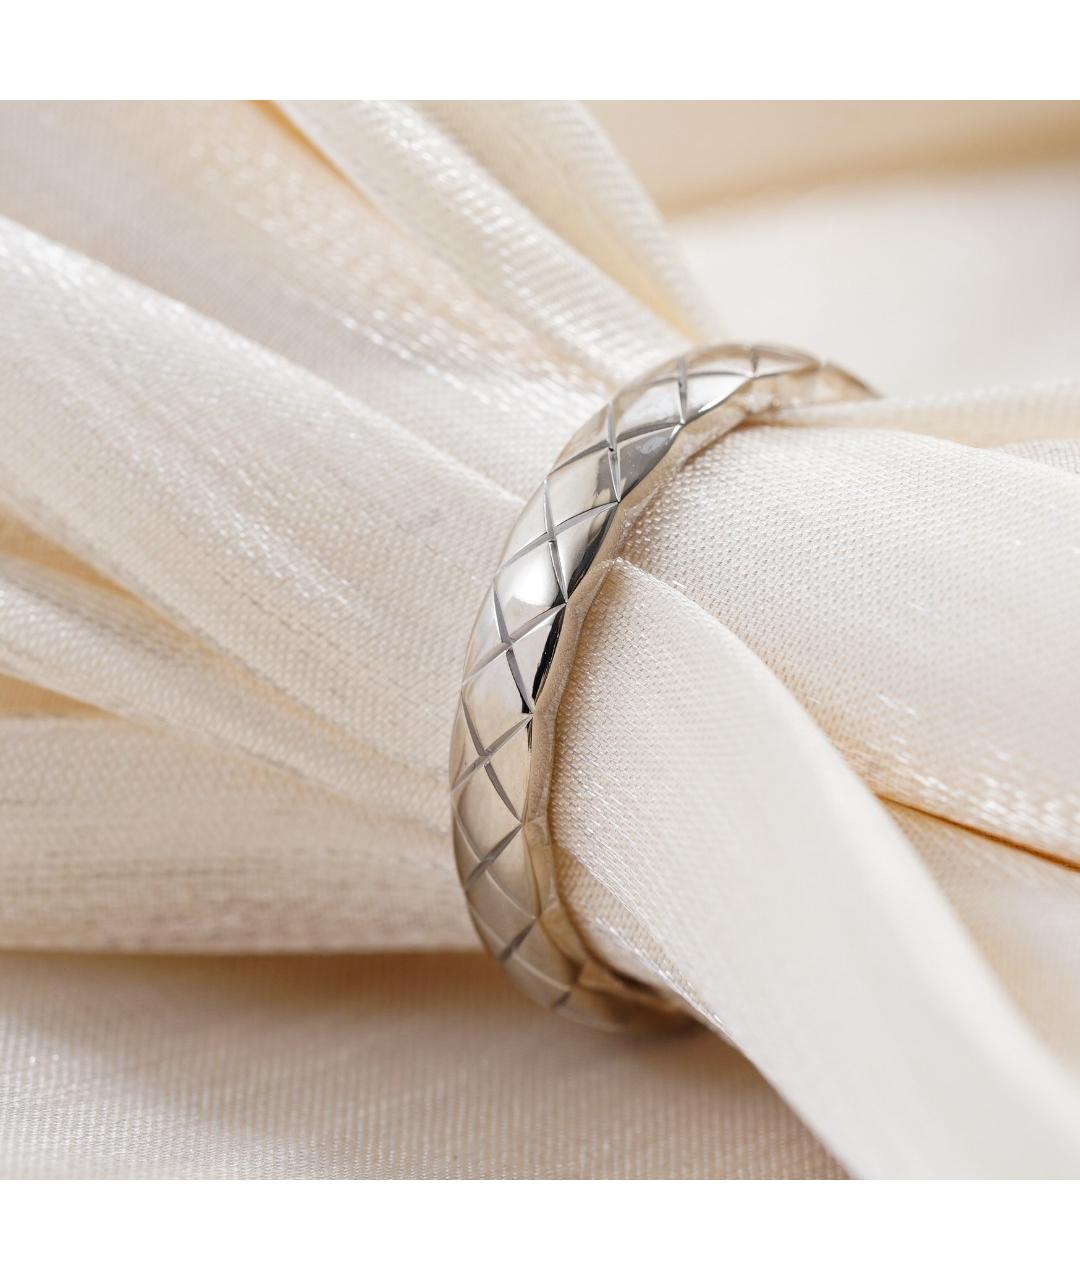 CHANEL PRE-OWNED Белое кольцо из белого золота, фото 6